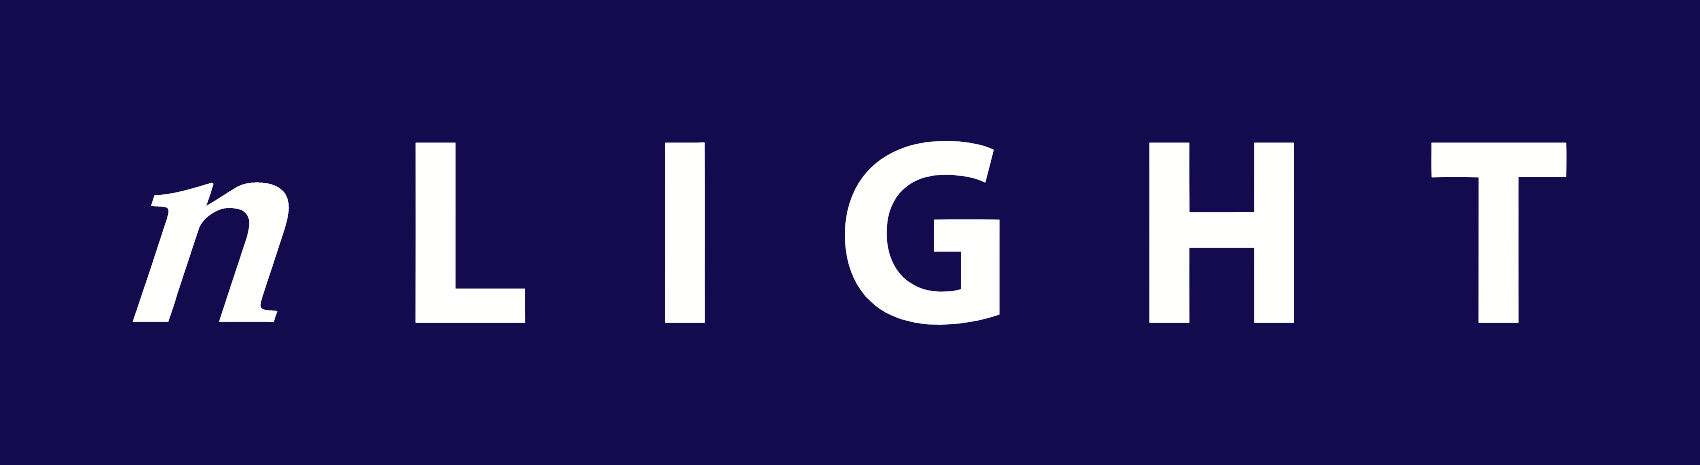 nLIGHT logo large (transparent PNG)